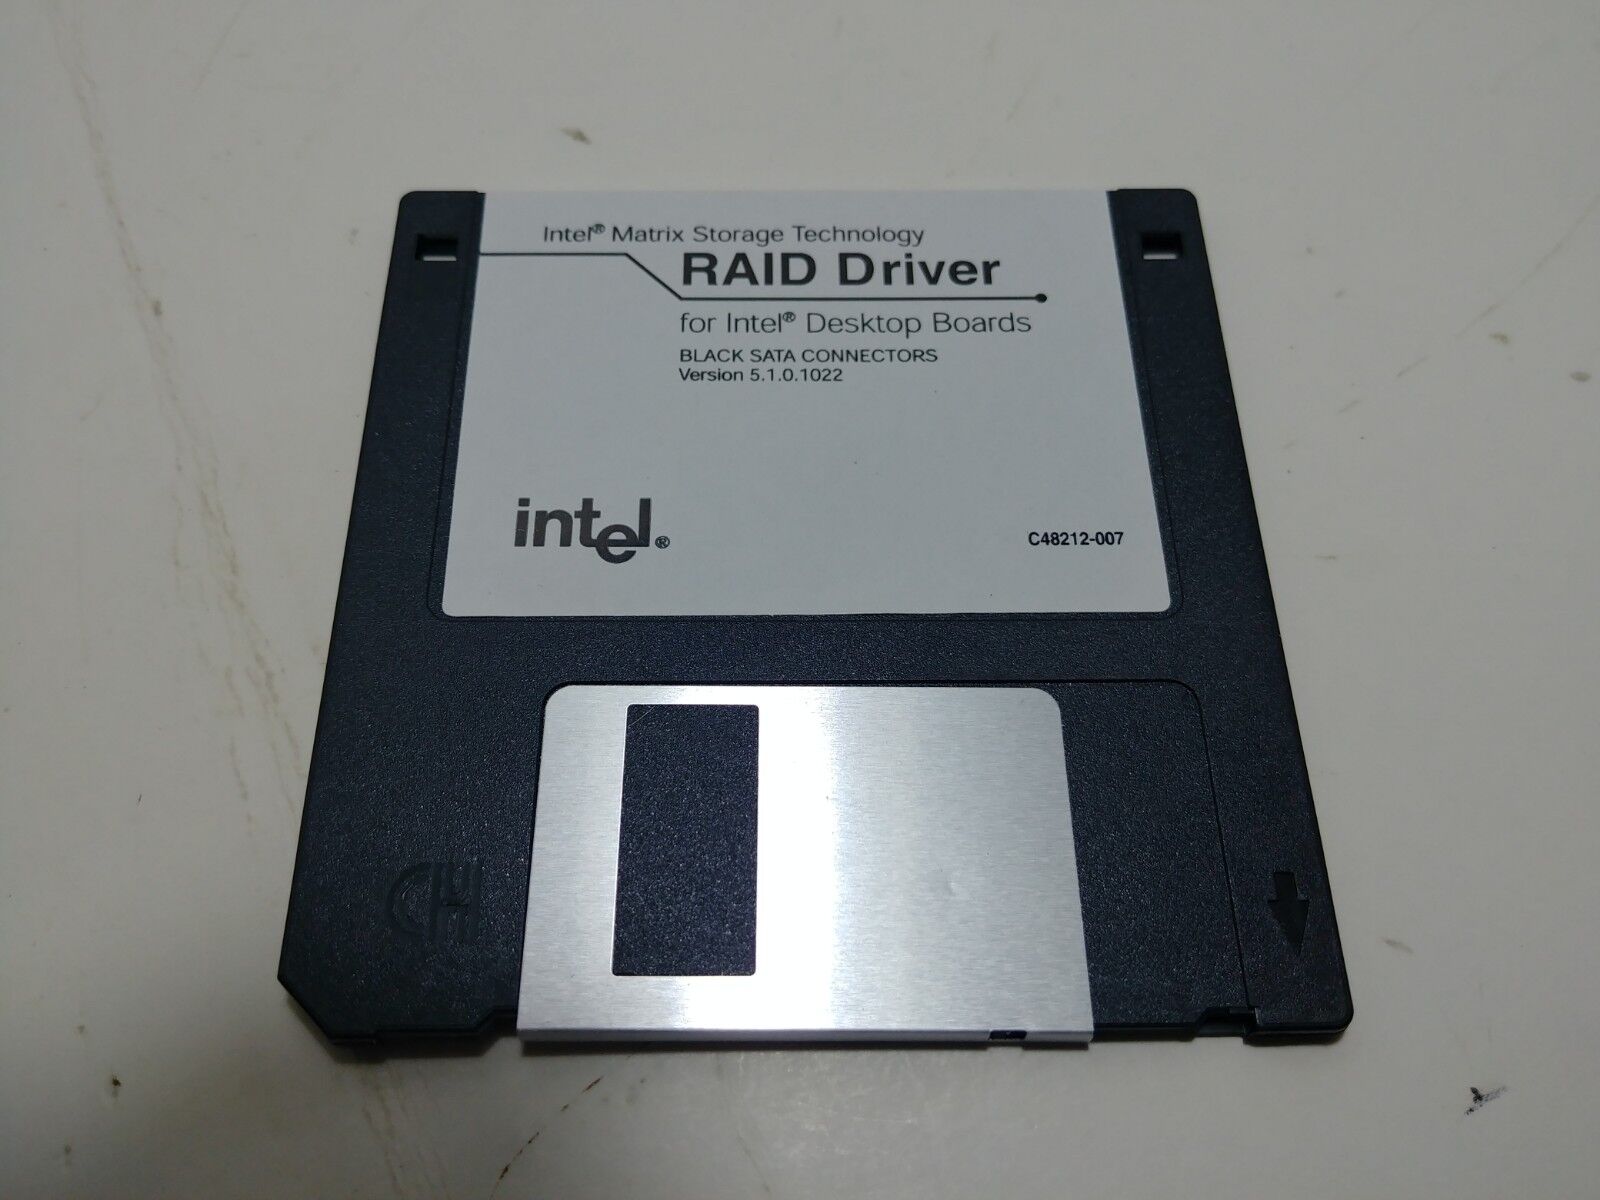 Intel Matrix RAID Driver for Intel Desktop Boards Floppy Disc